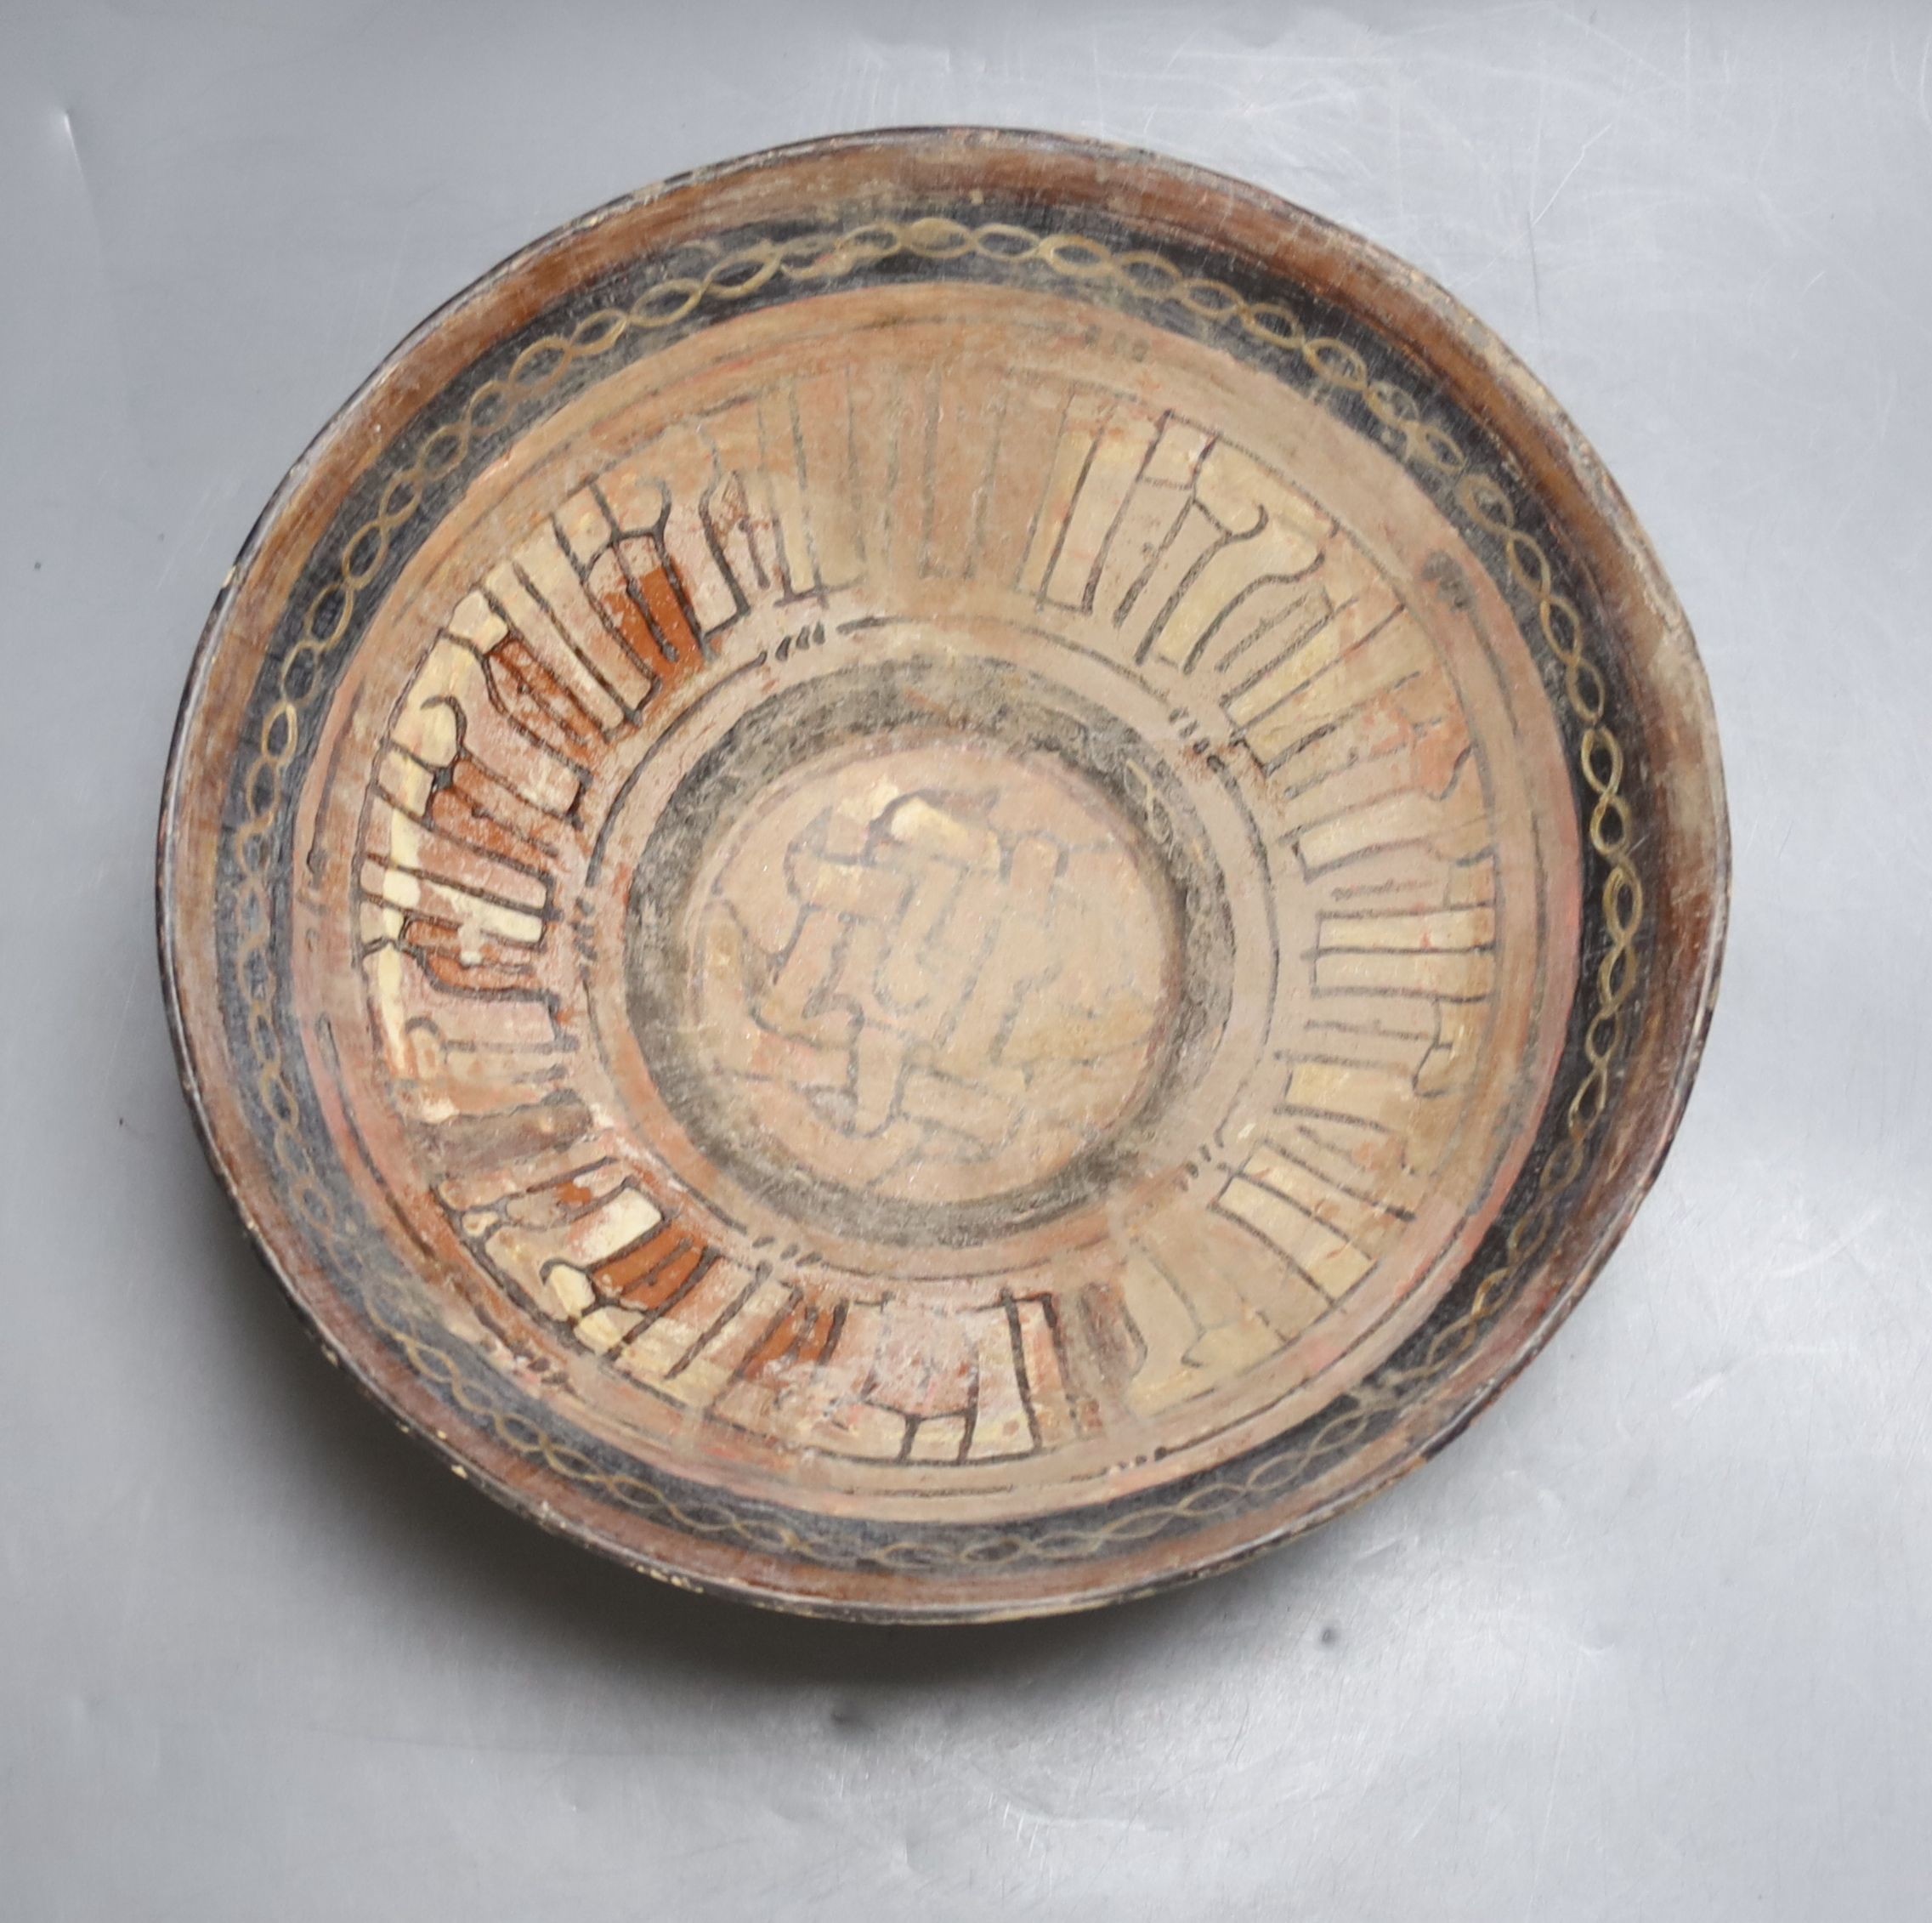 An Islamic bowl with kufic script, diameter 24cm